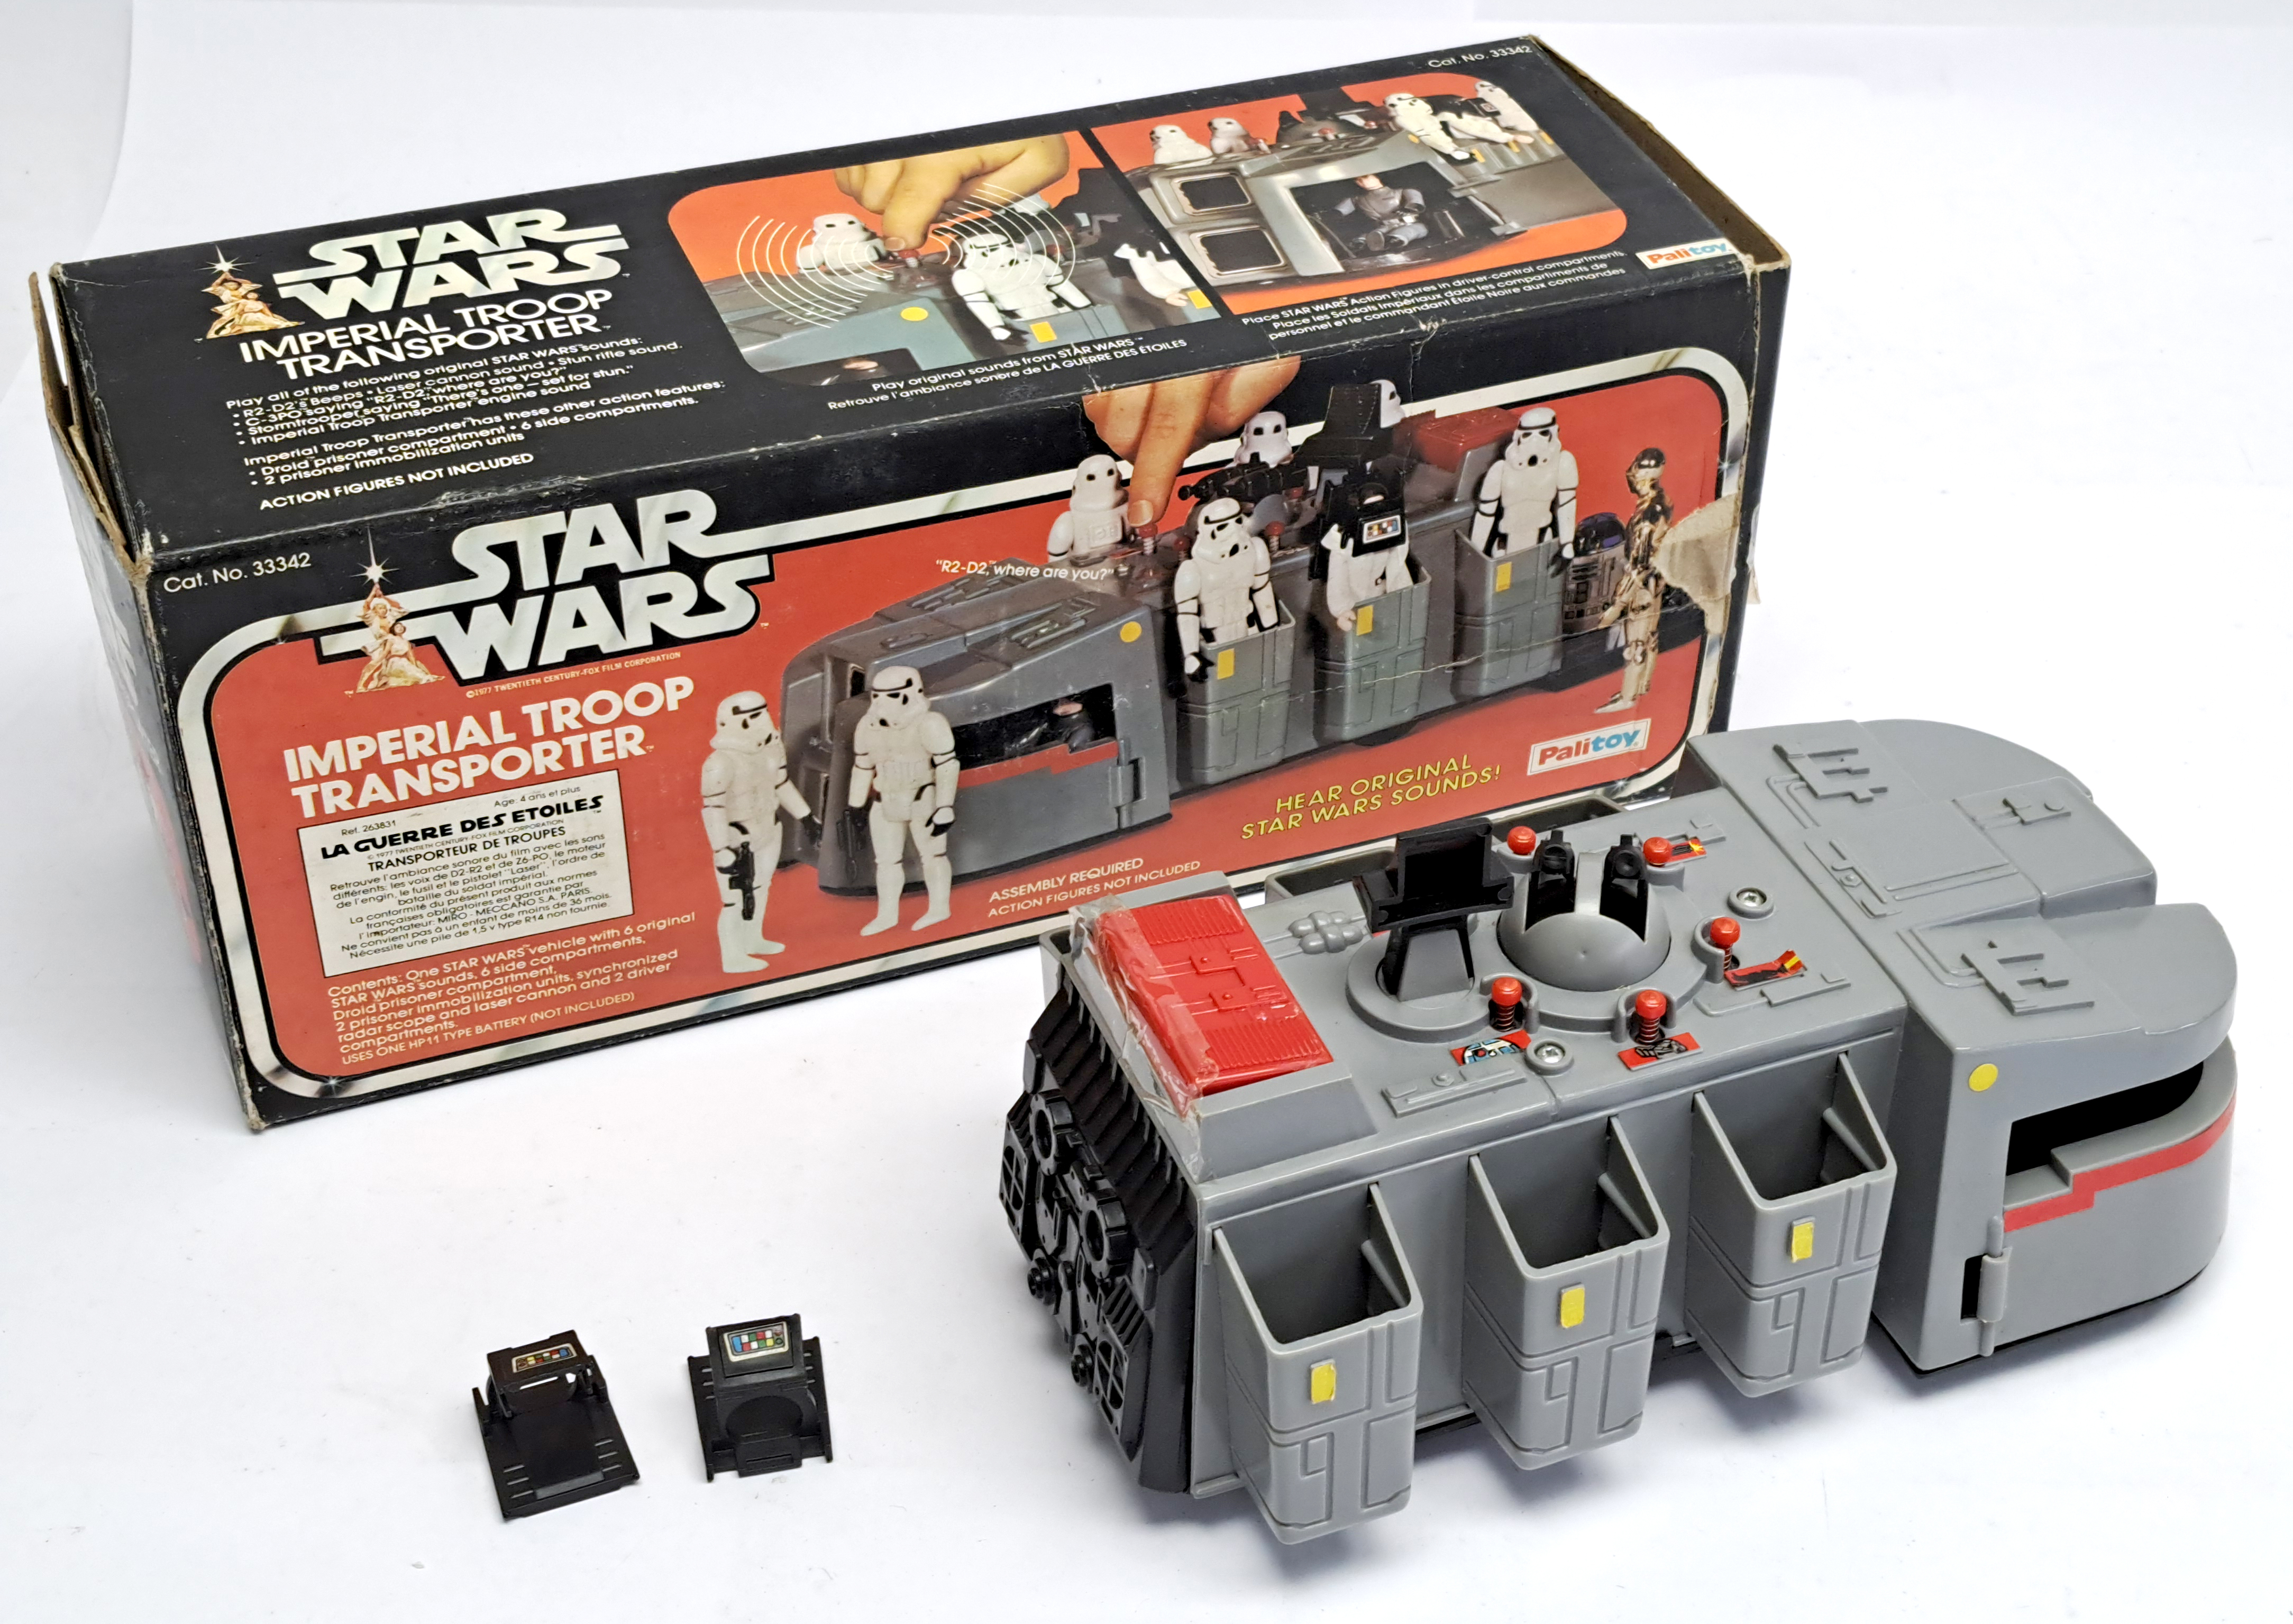 Palitoy Star Wars vintage Imperial Troop Transporter Loose in box